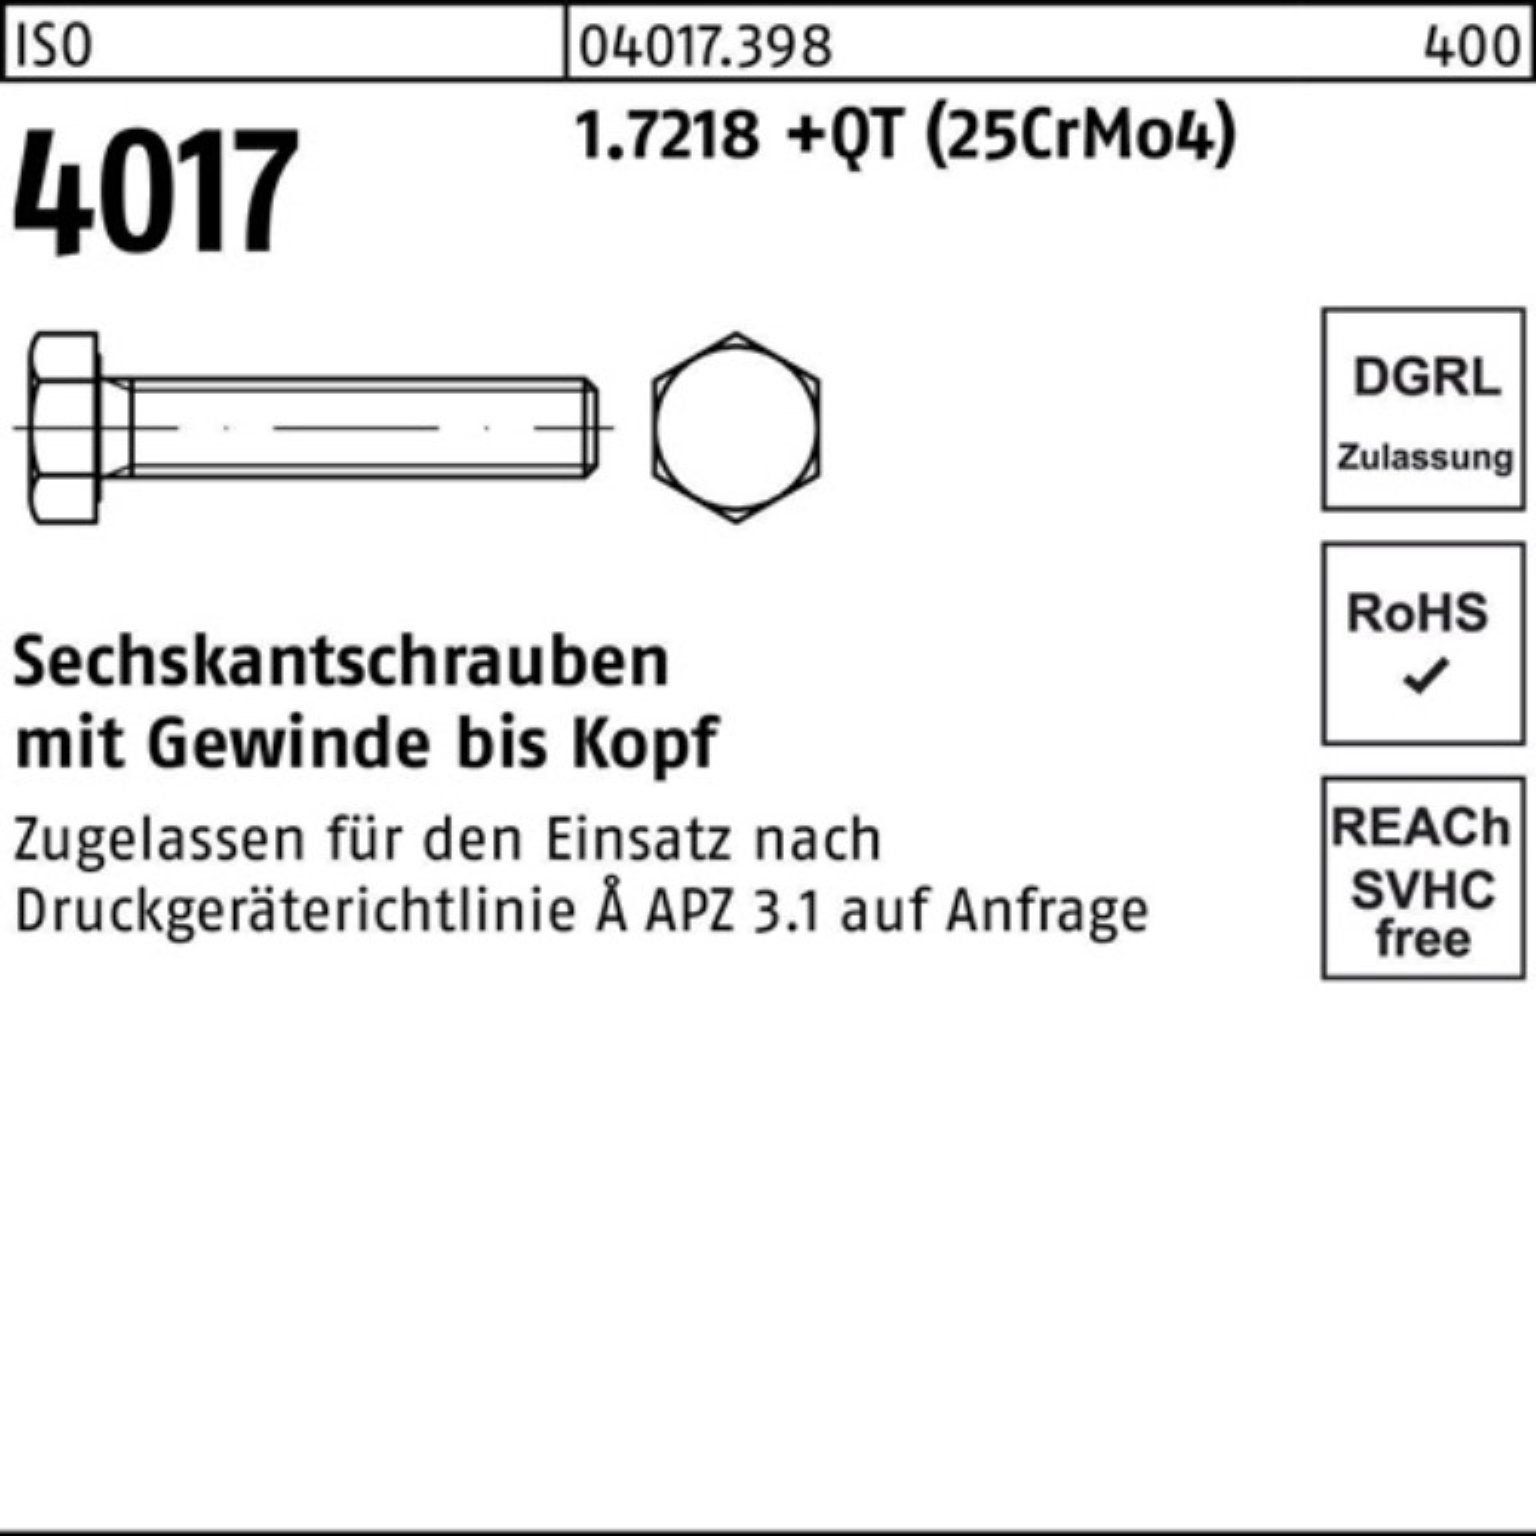 Bufab Sechskantschraube 100er 1.7218 Sechskantschraube +QT VG M27x Pack 4017 ISO 60 (25CrMo4)